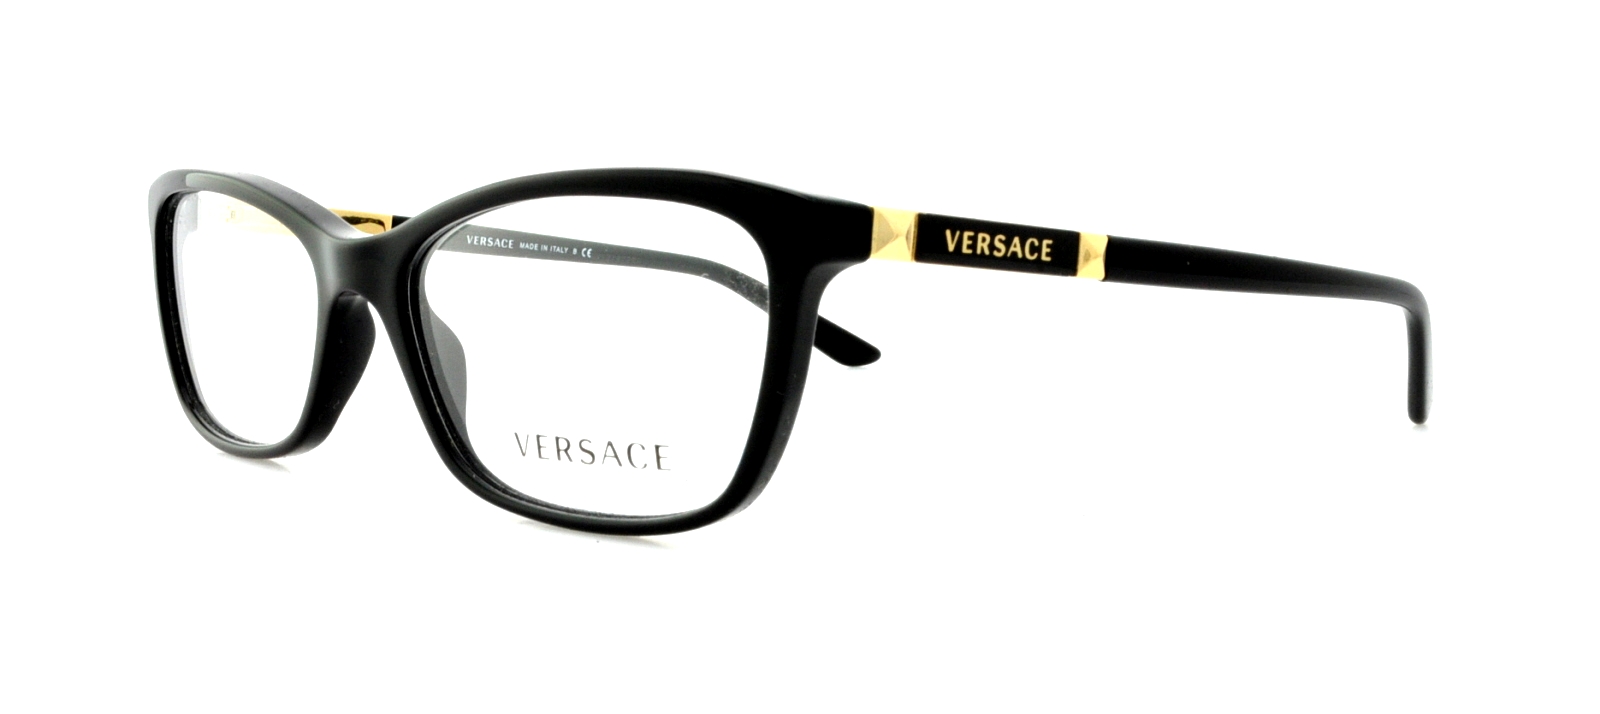 Picture of Versace Eyeglasses VE3186